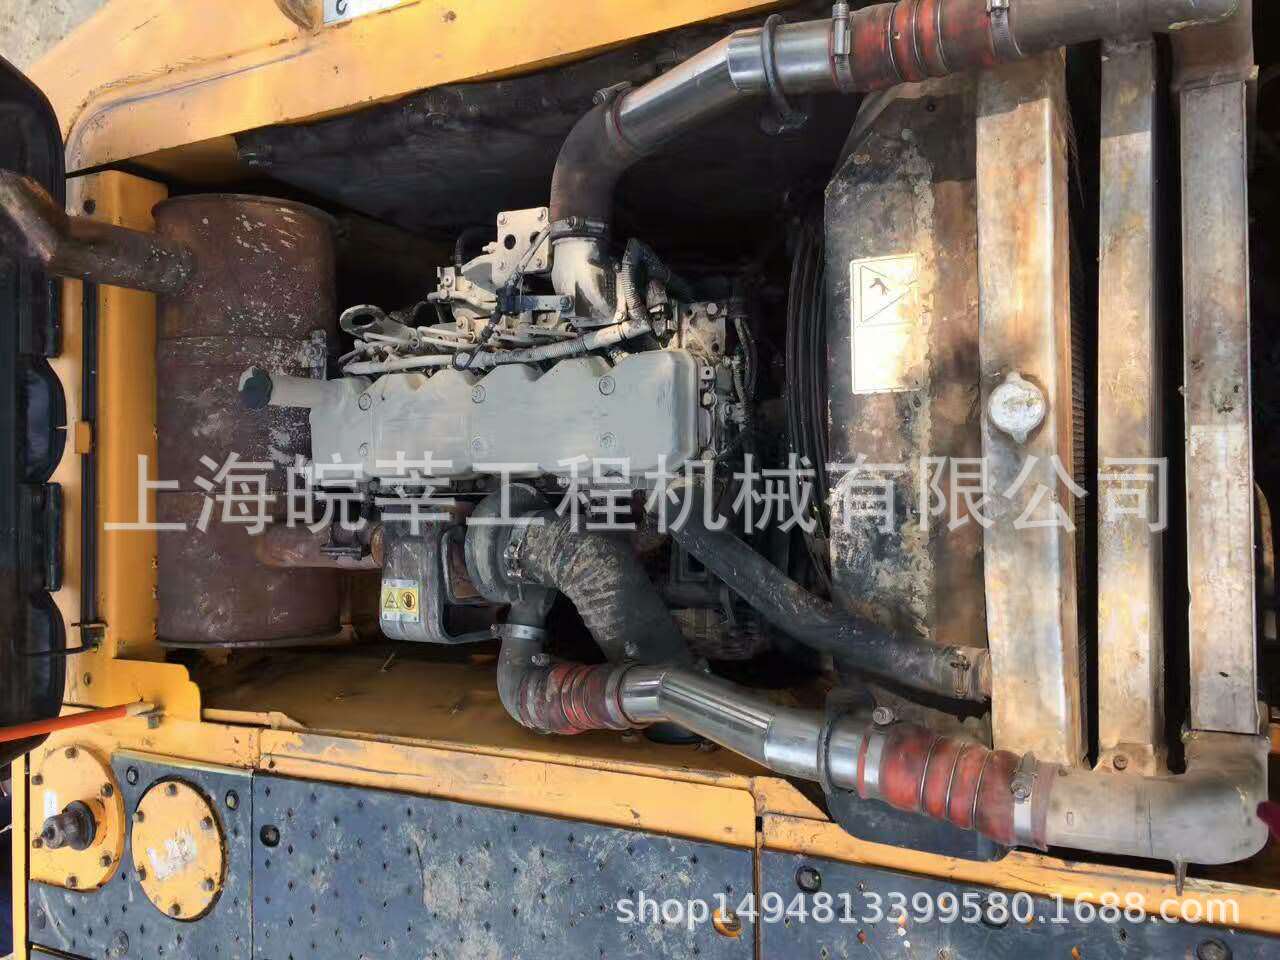 Used Modern 225-9 Excavator Parameters Price Pictures Shanghai, Excavator Market Address Phone Size